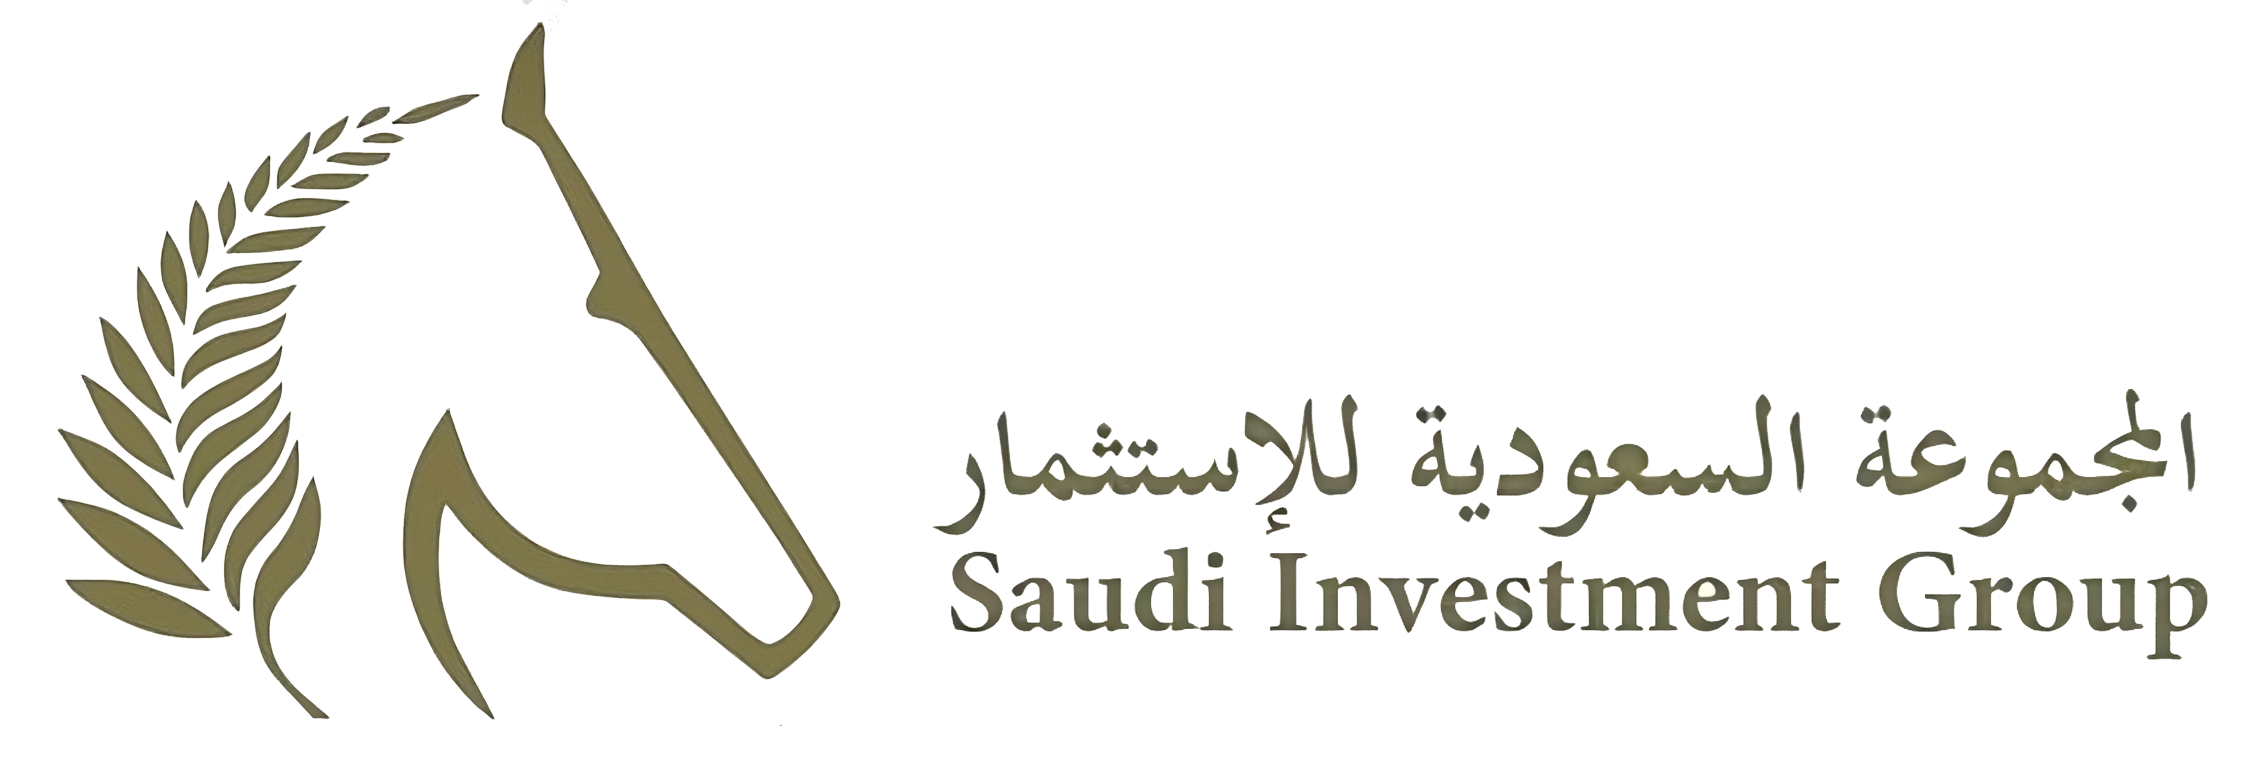 Saudi Investment Group